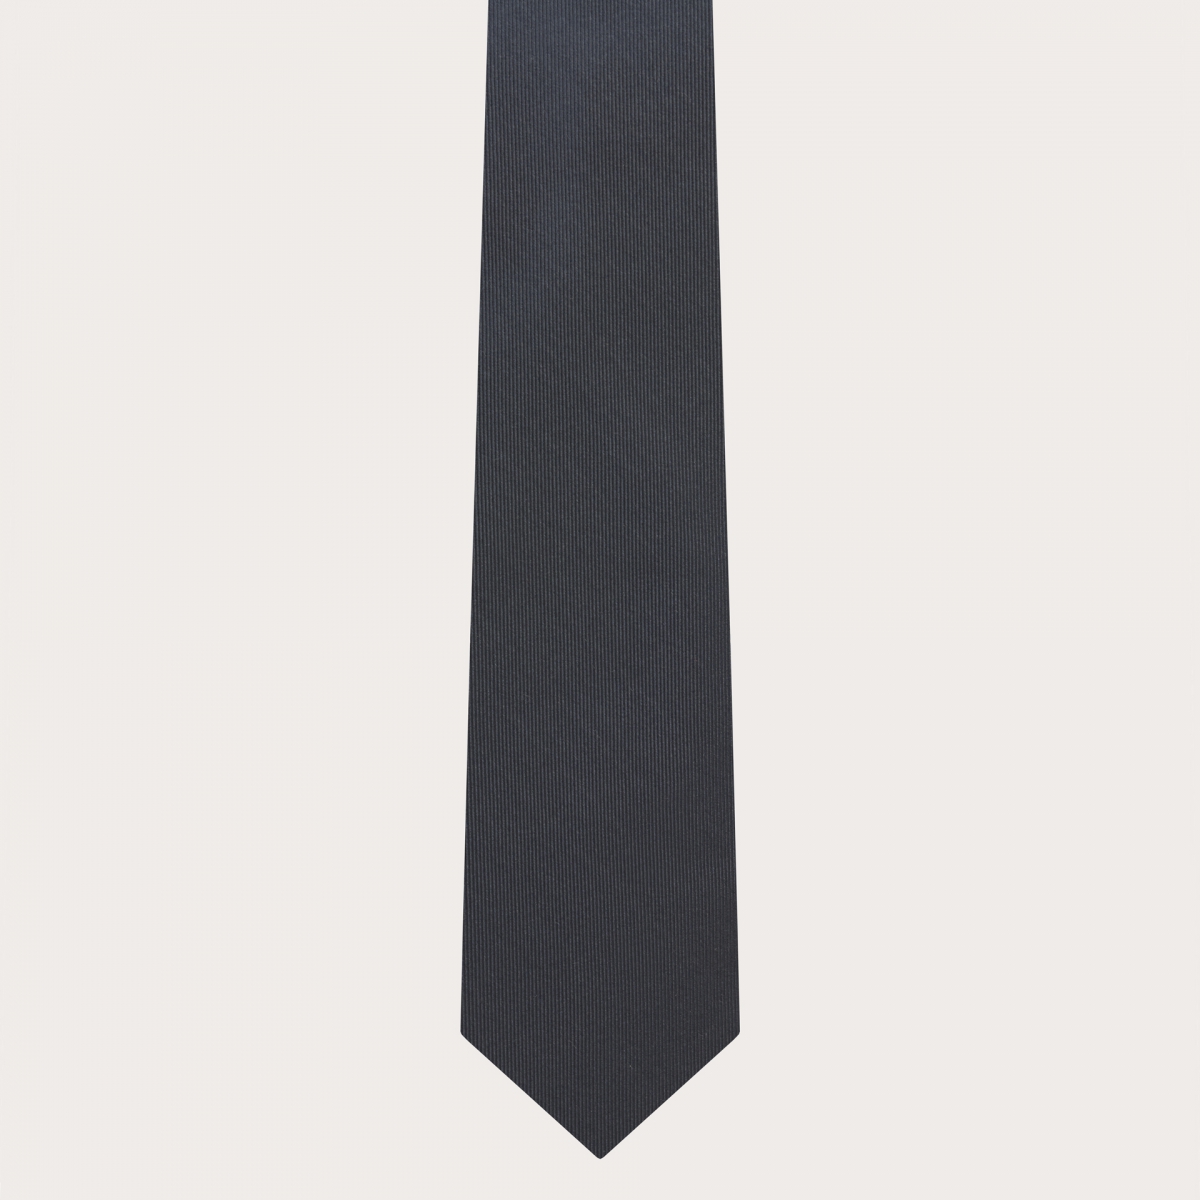 BRUCLE Set bretelle e cravatta in seta grigio antracite